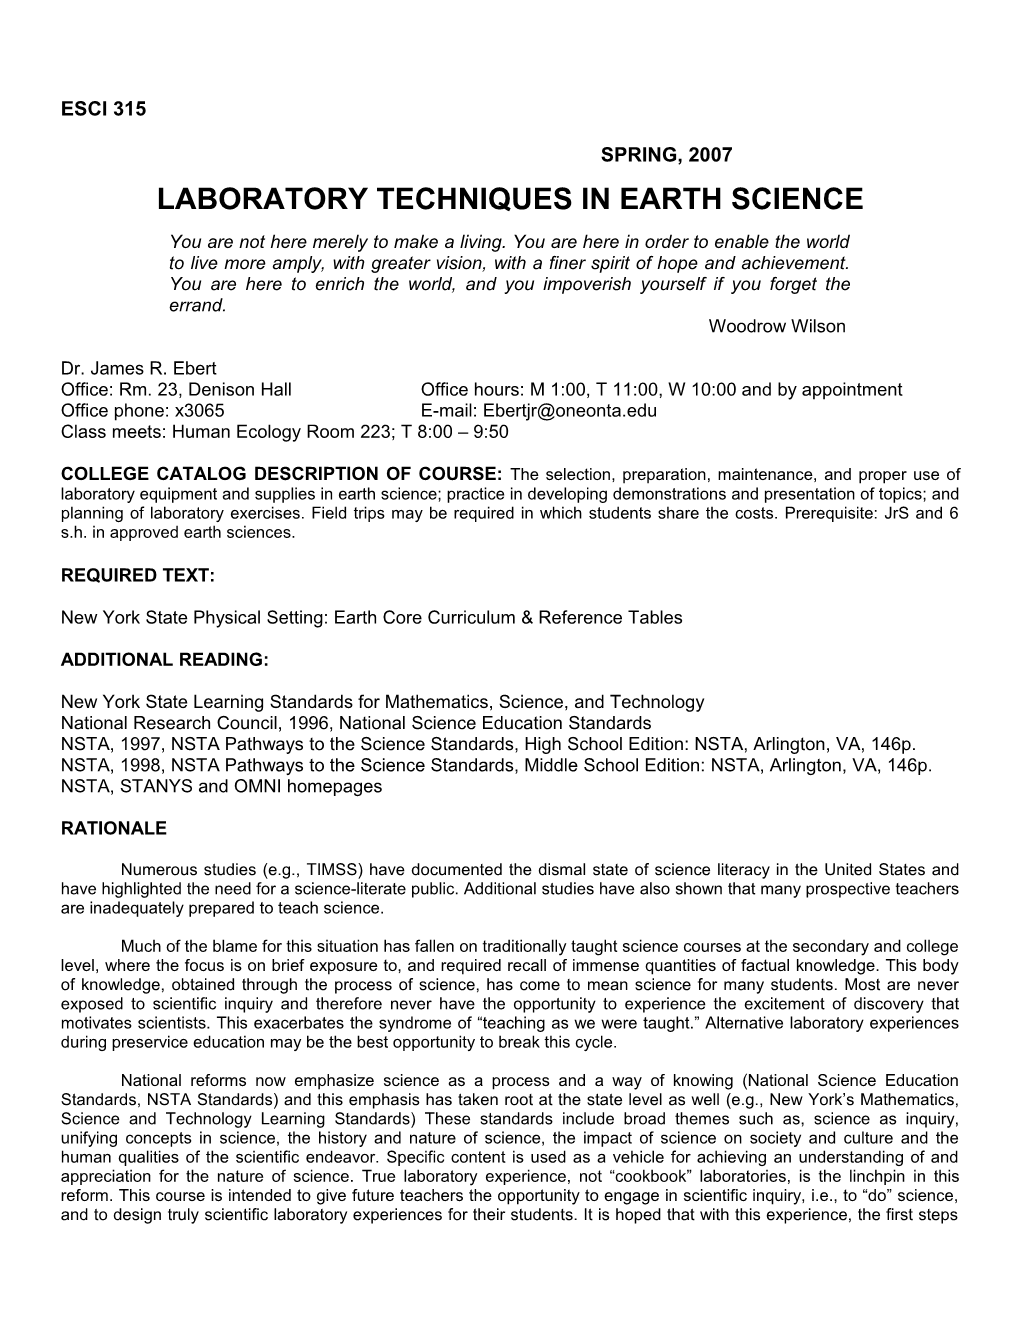 Laboratory Techniques in Earth Science